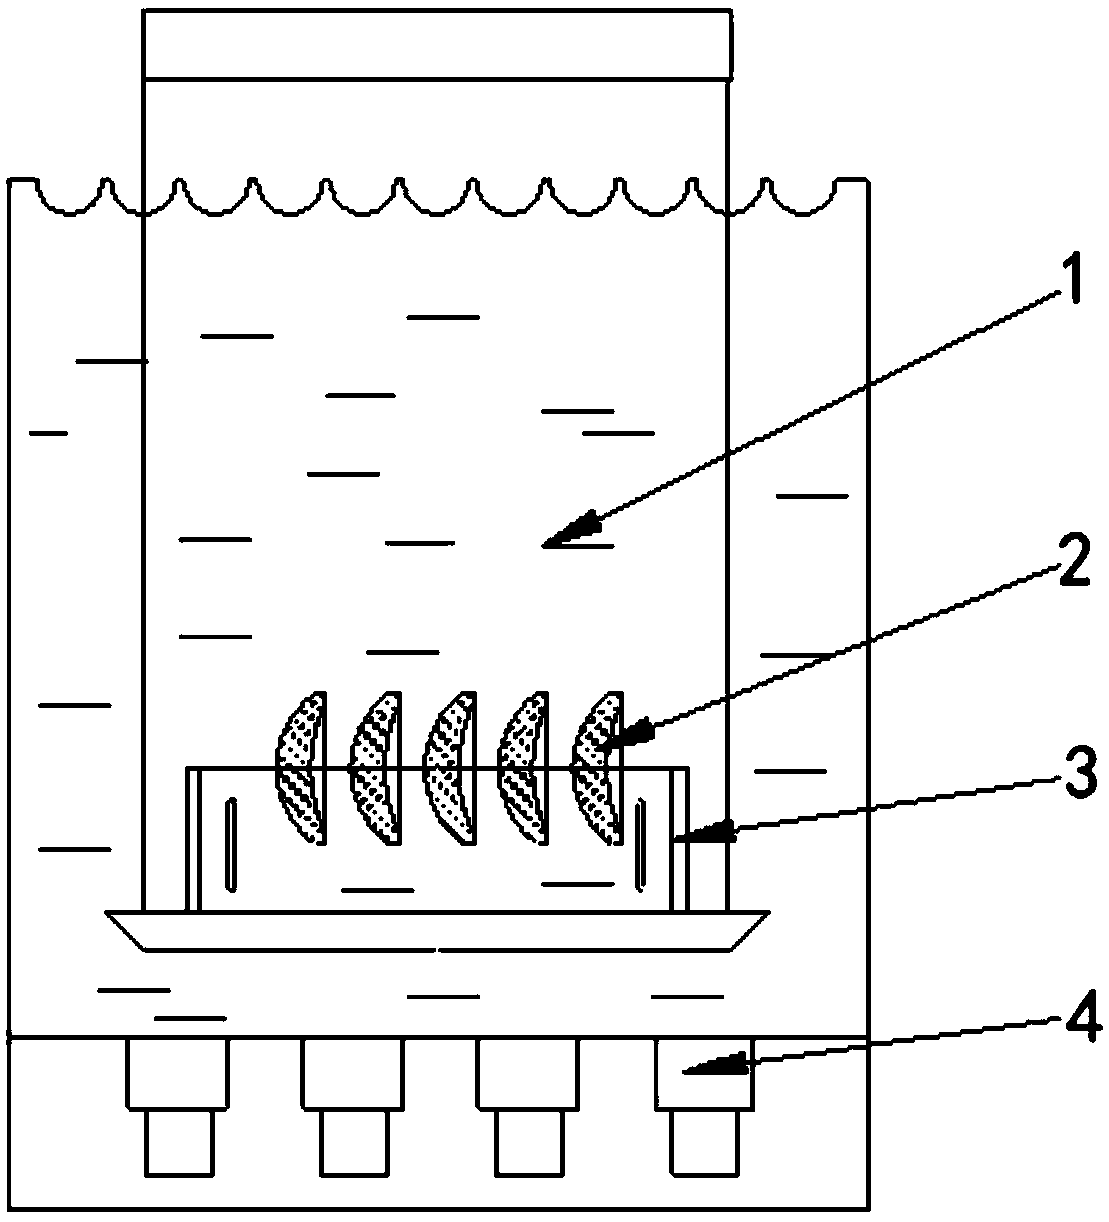 Method for polishing surface of optical lens